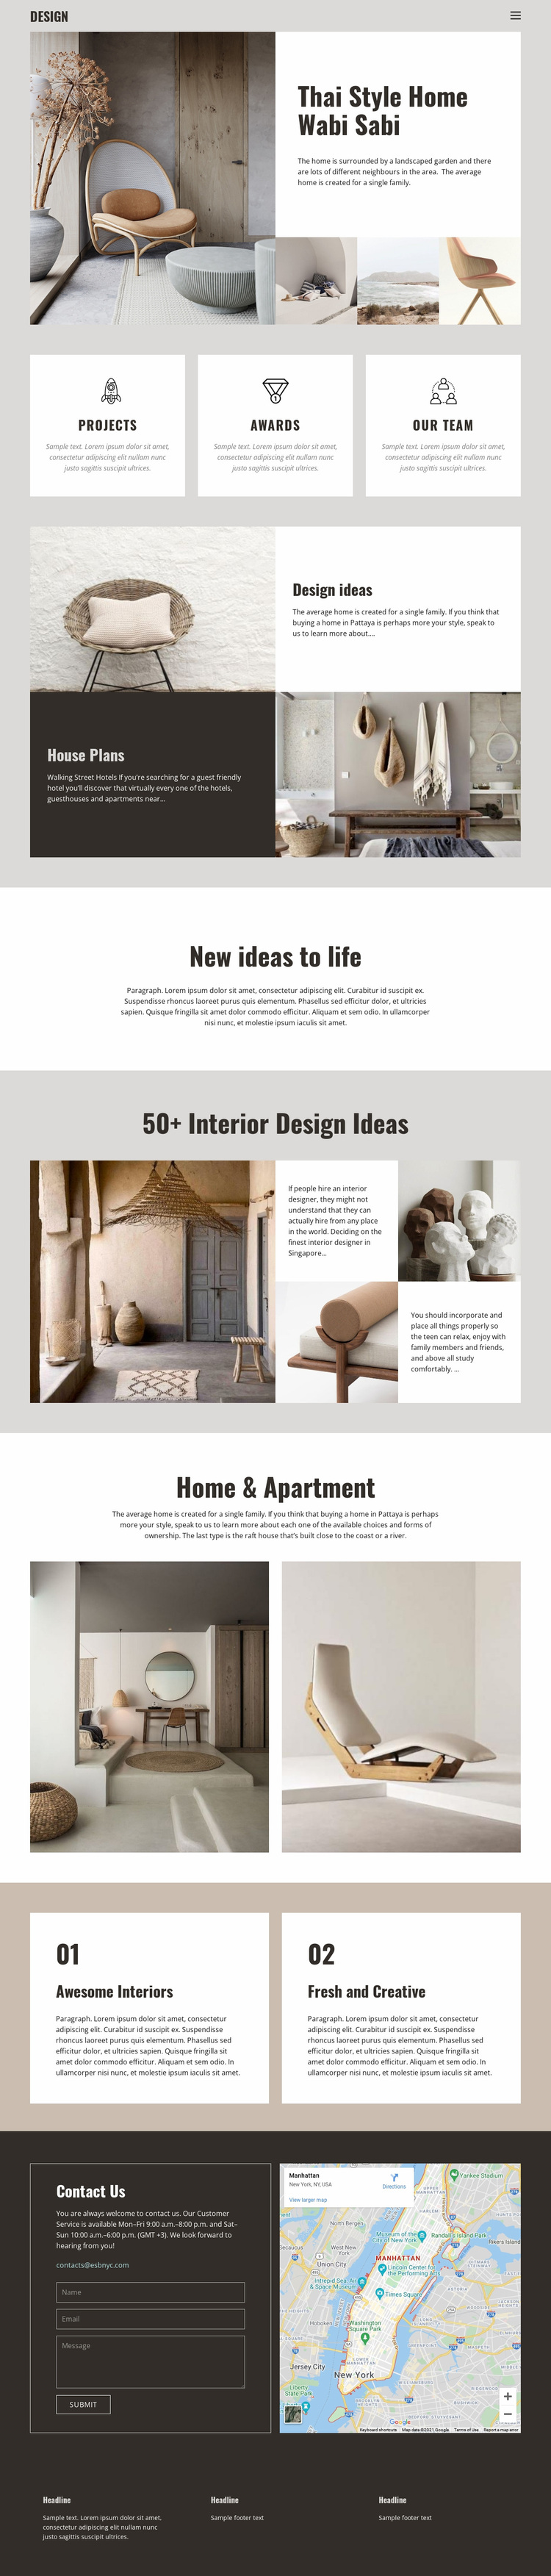 Thai style for home design Website Design